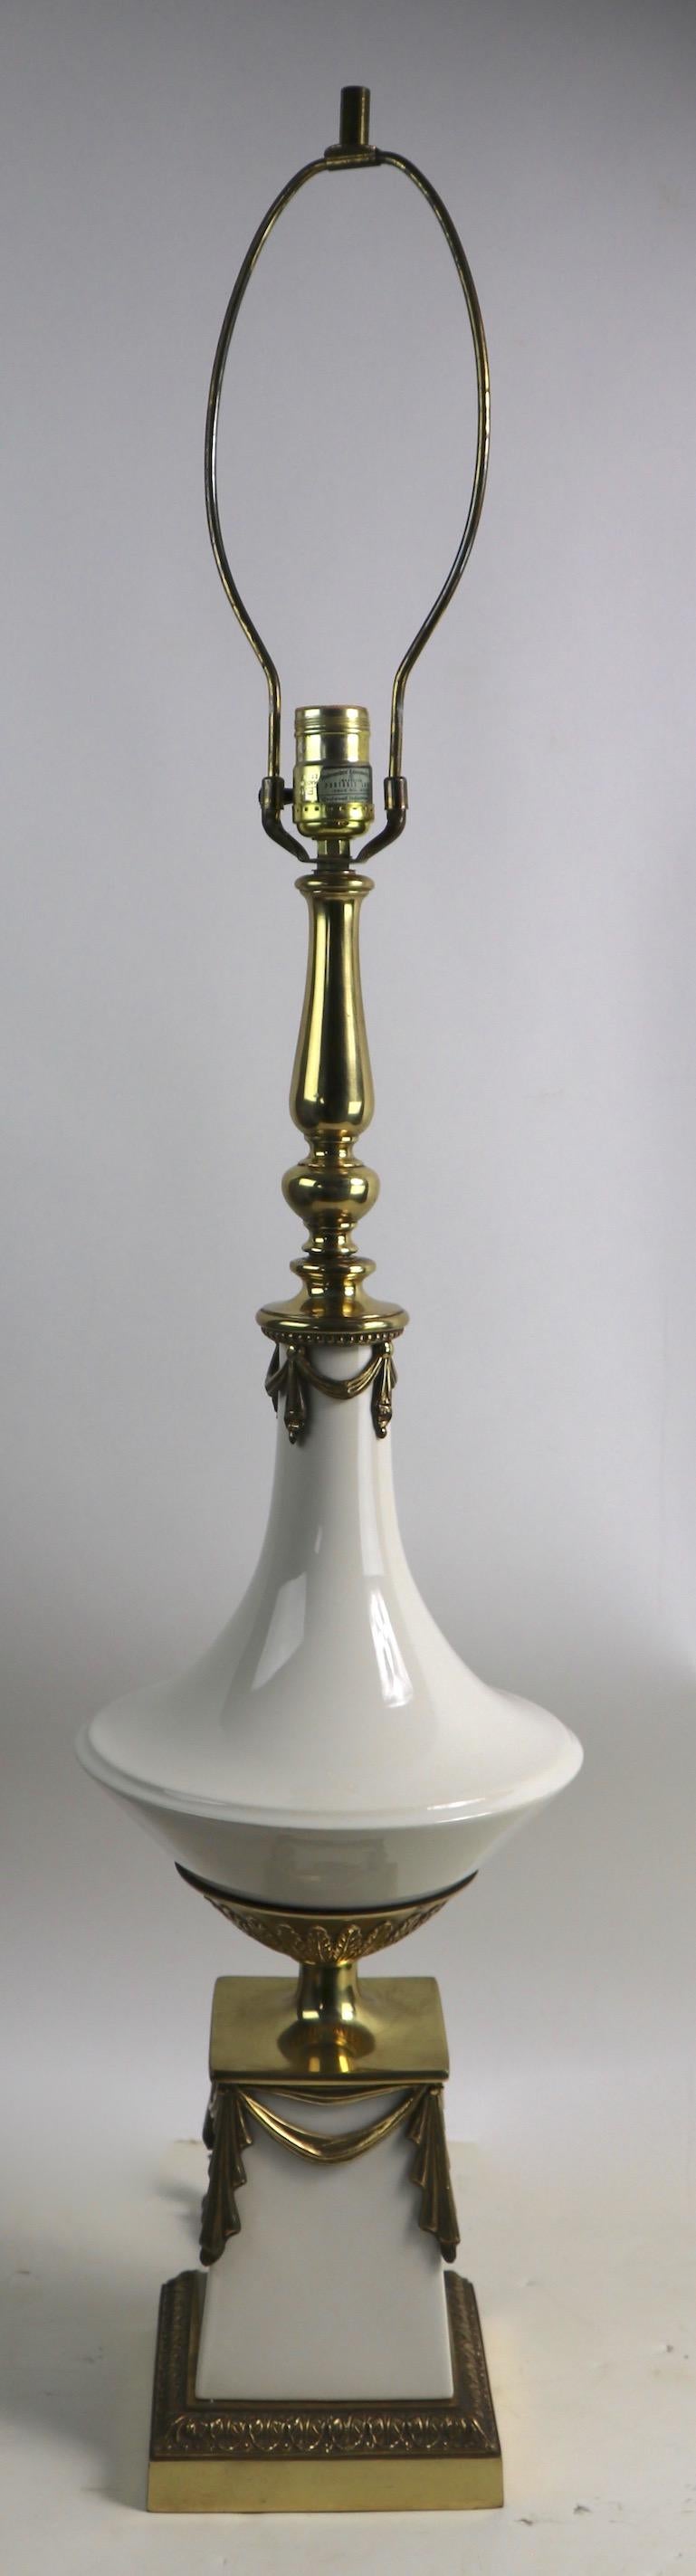 American Hollywood Regency Lamp by Westwood Industries For Sale